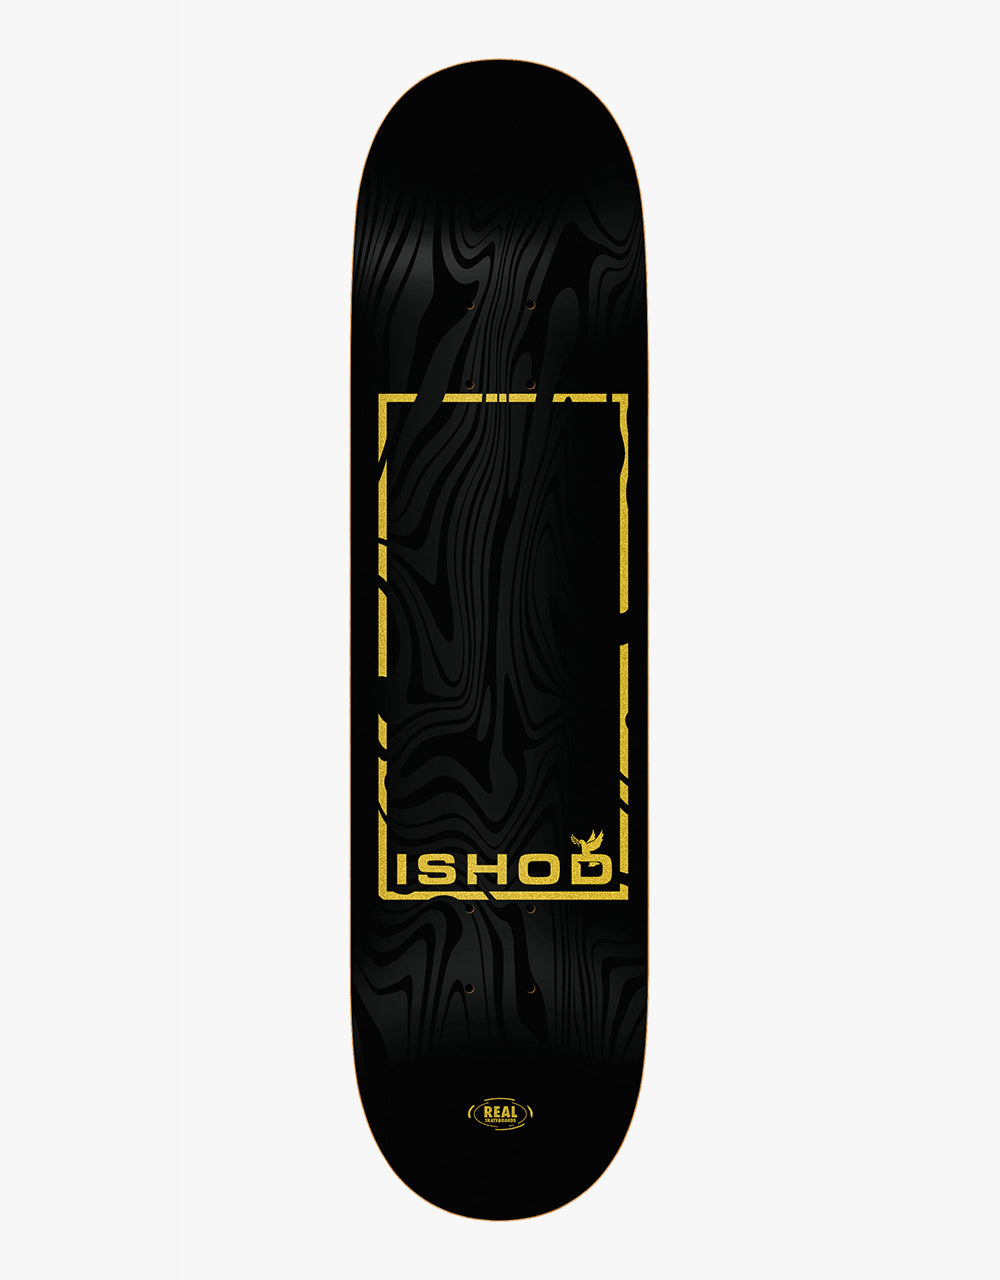 Real Ishod Marble Dove Skateboard Deck - 8.12"